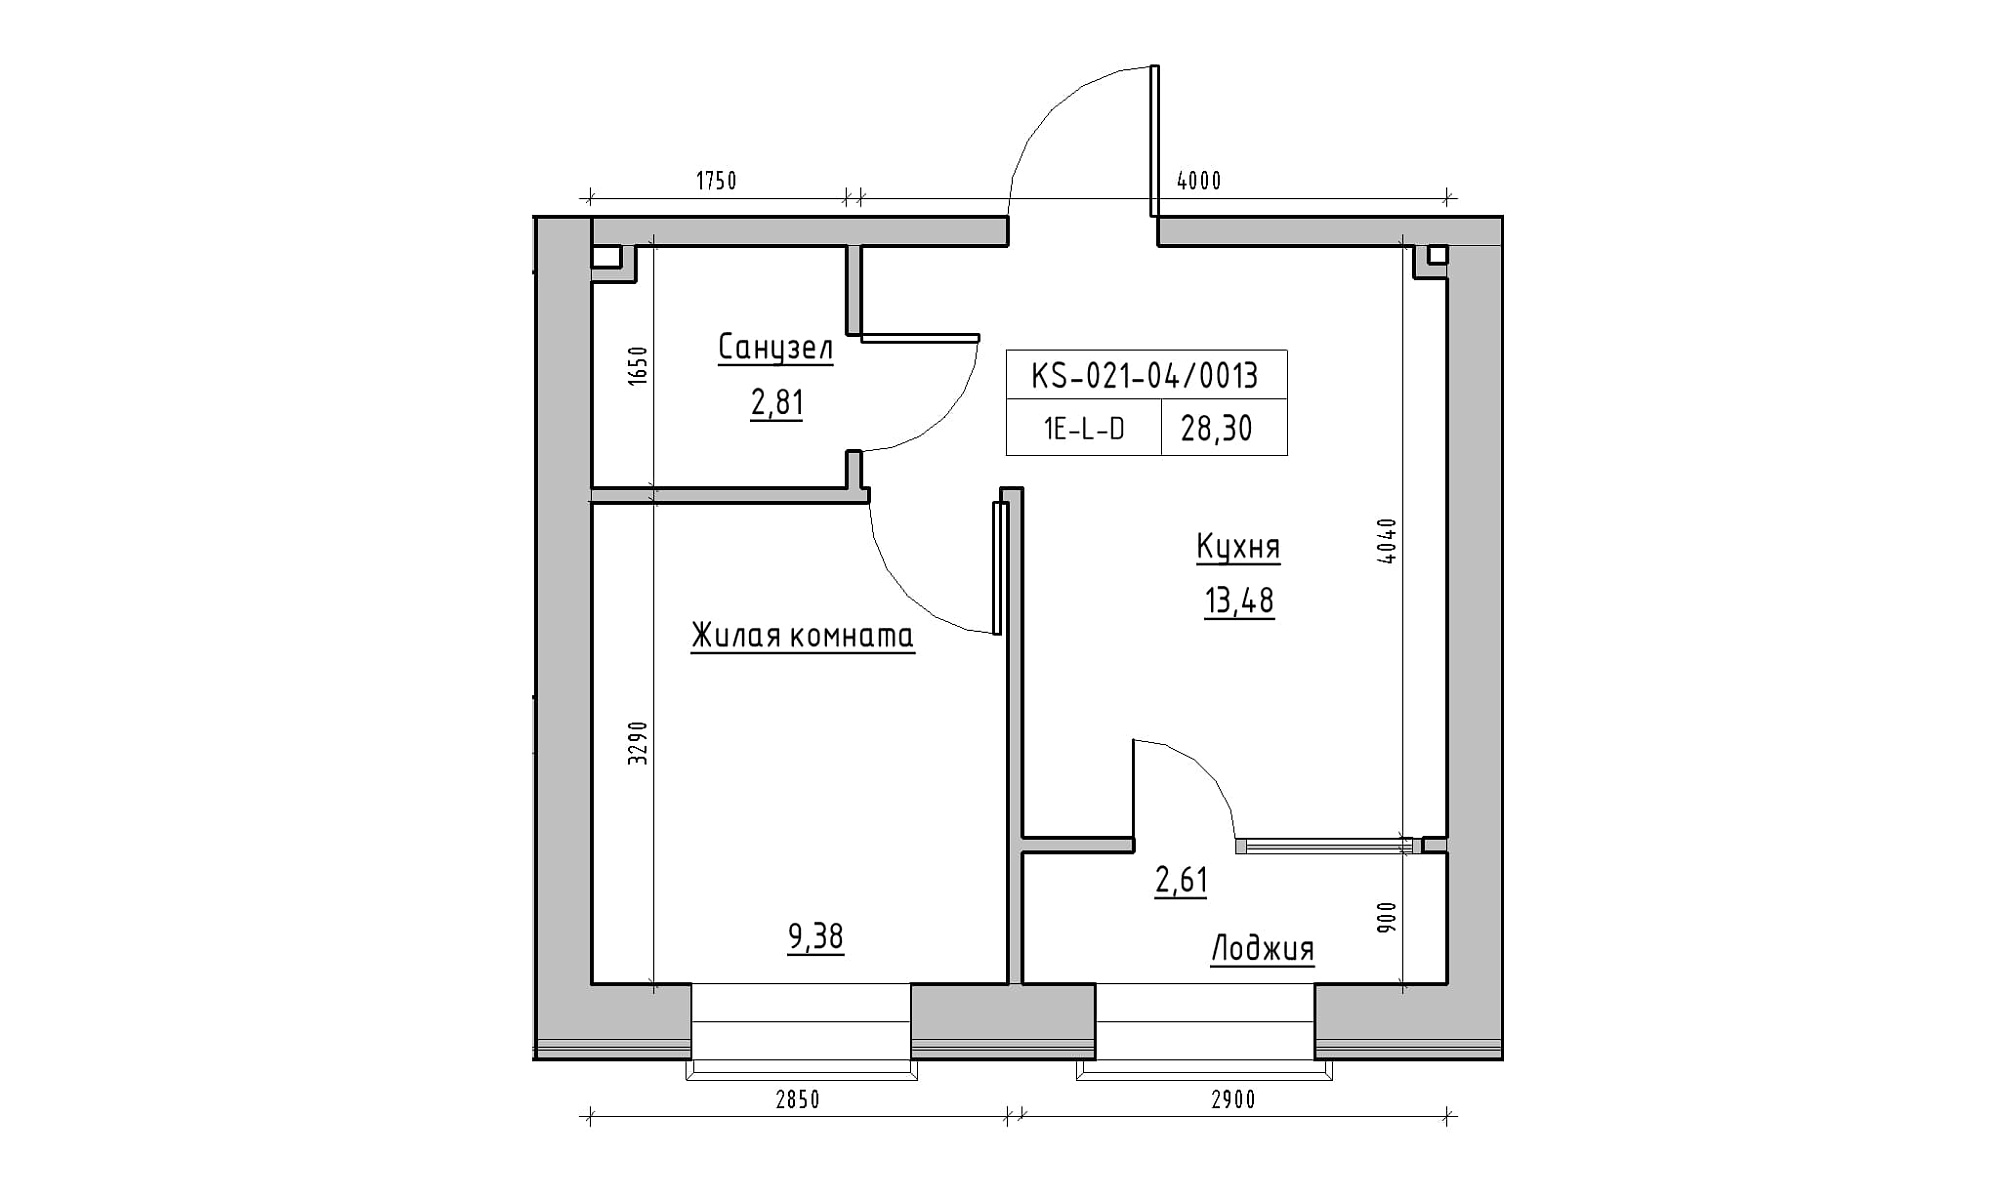 Planning 1-rm flats area 28.3m2, KS-021-04/0013.